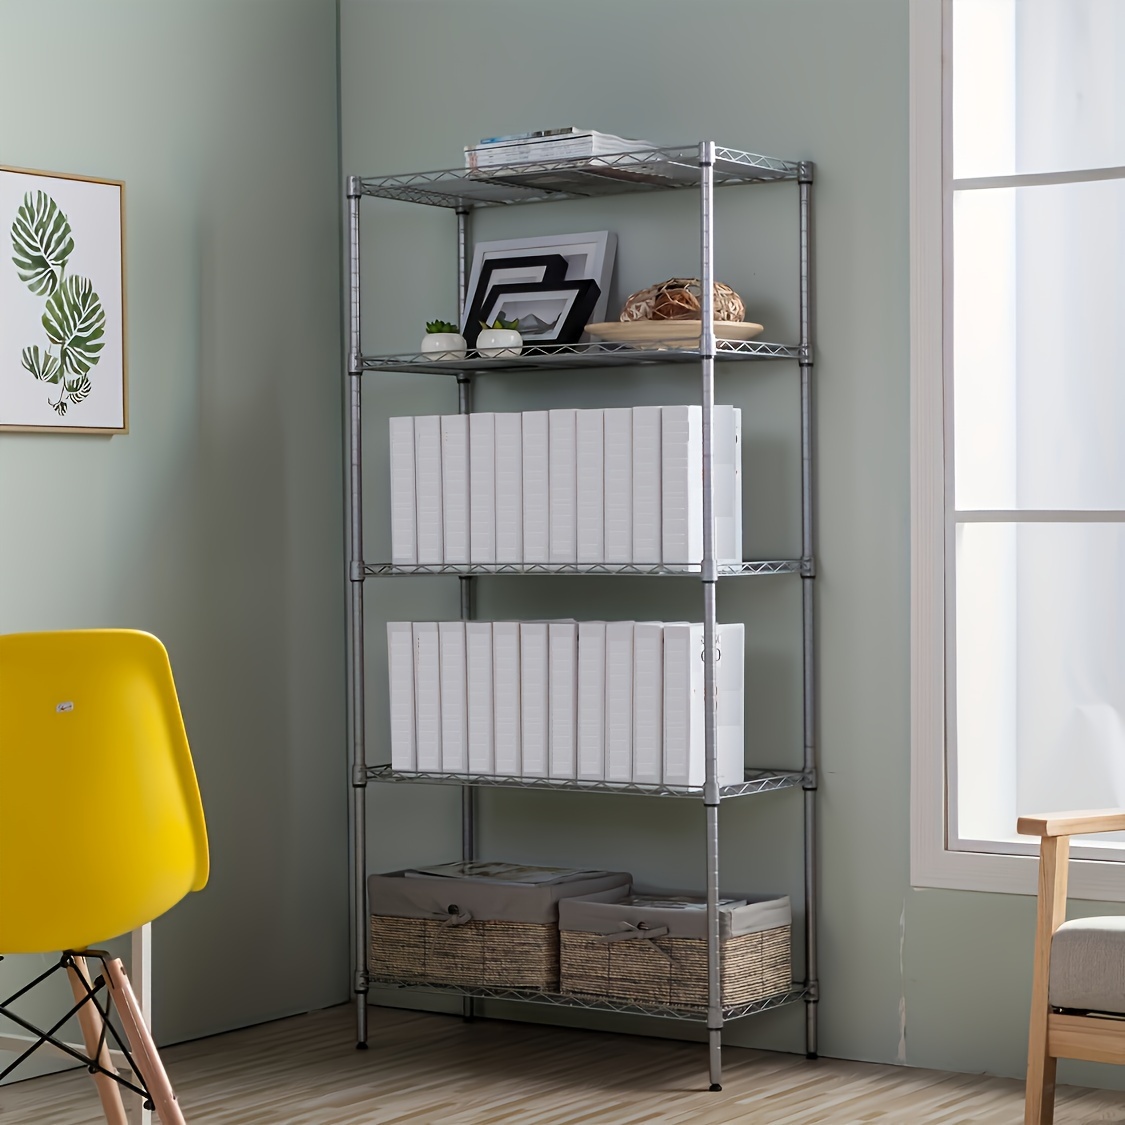 Buy 5 Tier Metal Storage Rack Foldable Shelf Kitchen Organizer Bedroom  Shelves Rolling Cart Online - Shop Home & Garden on Carrefour UAE